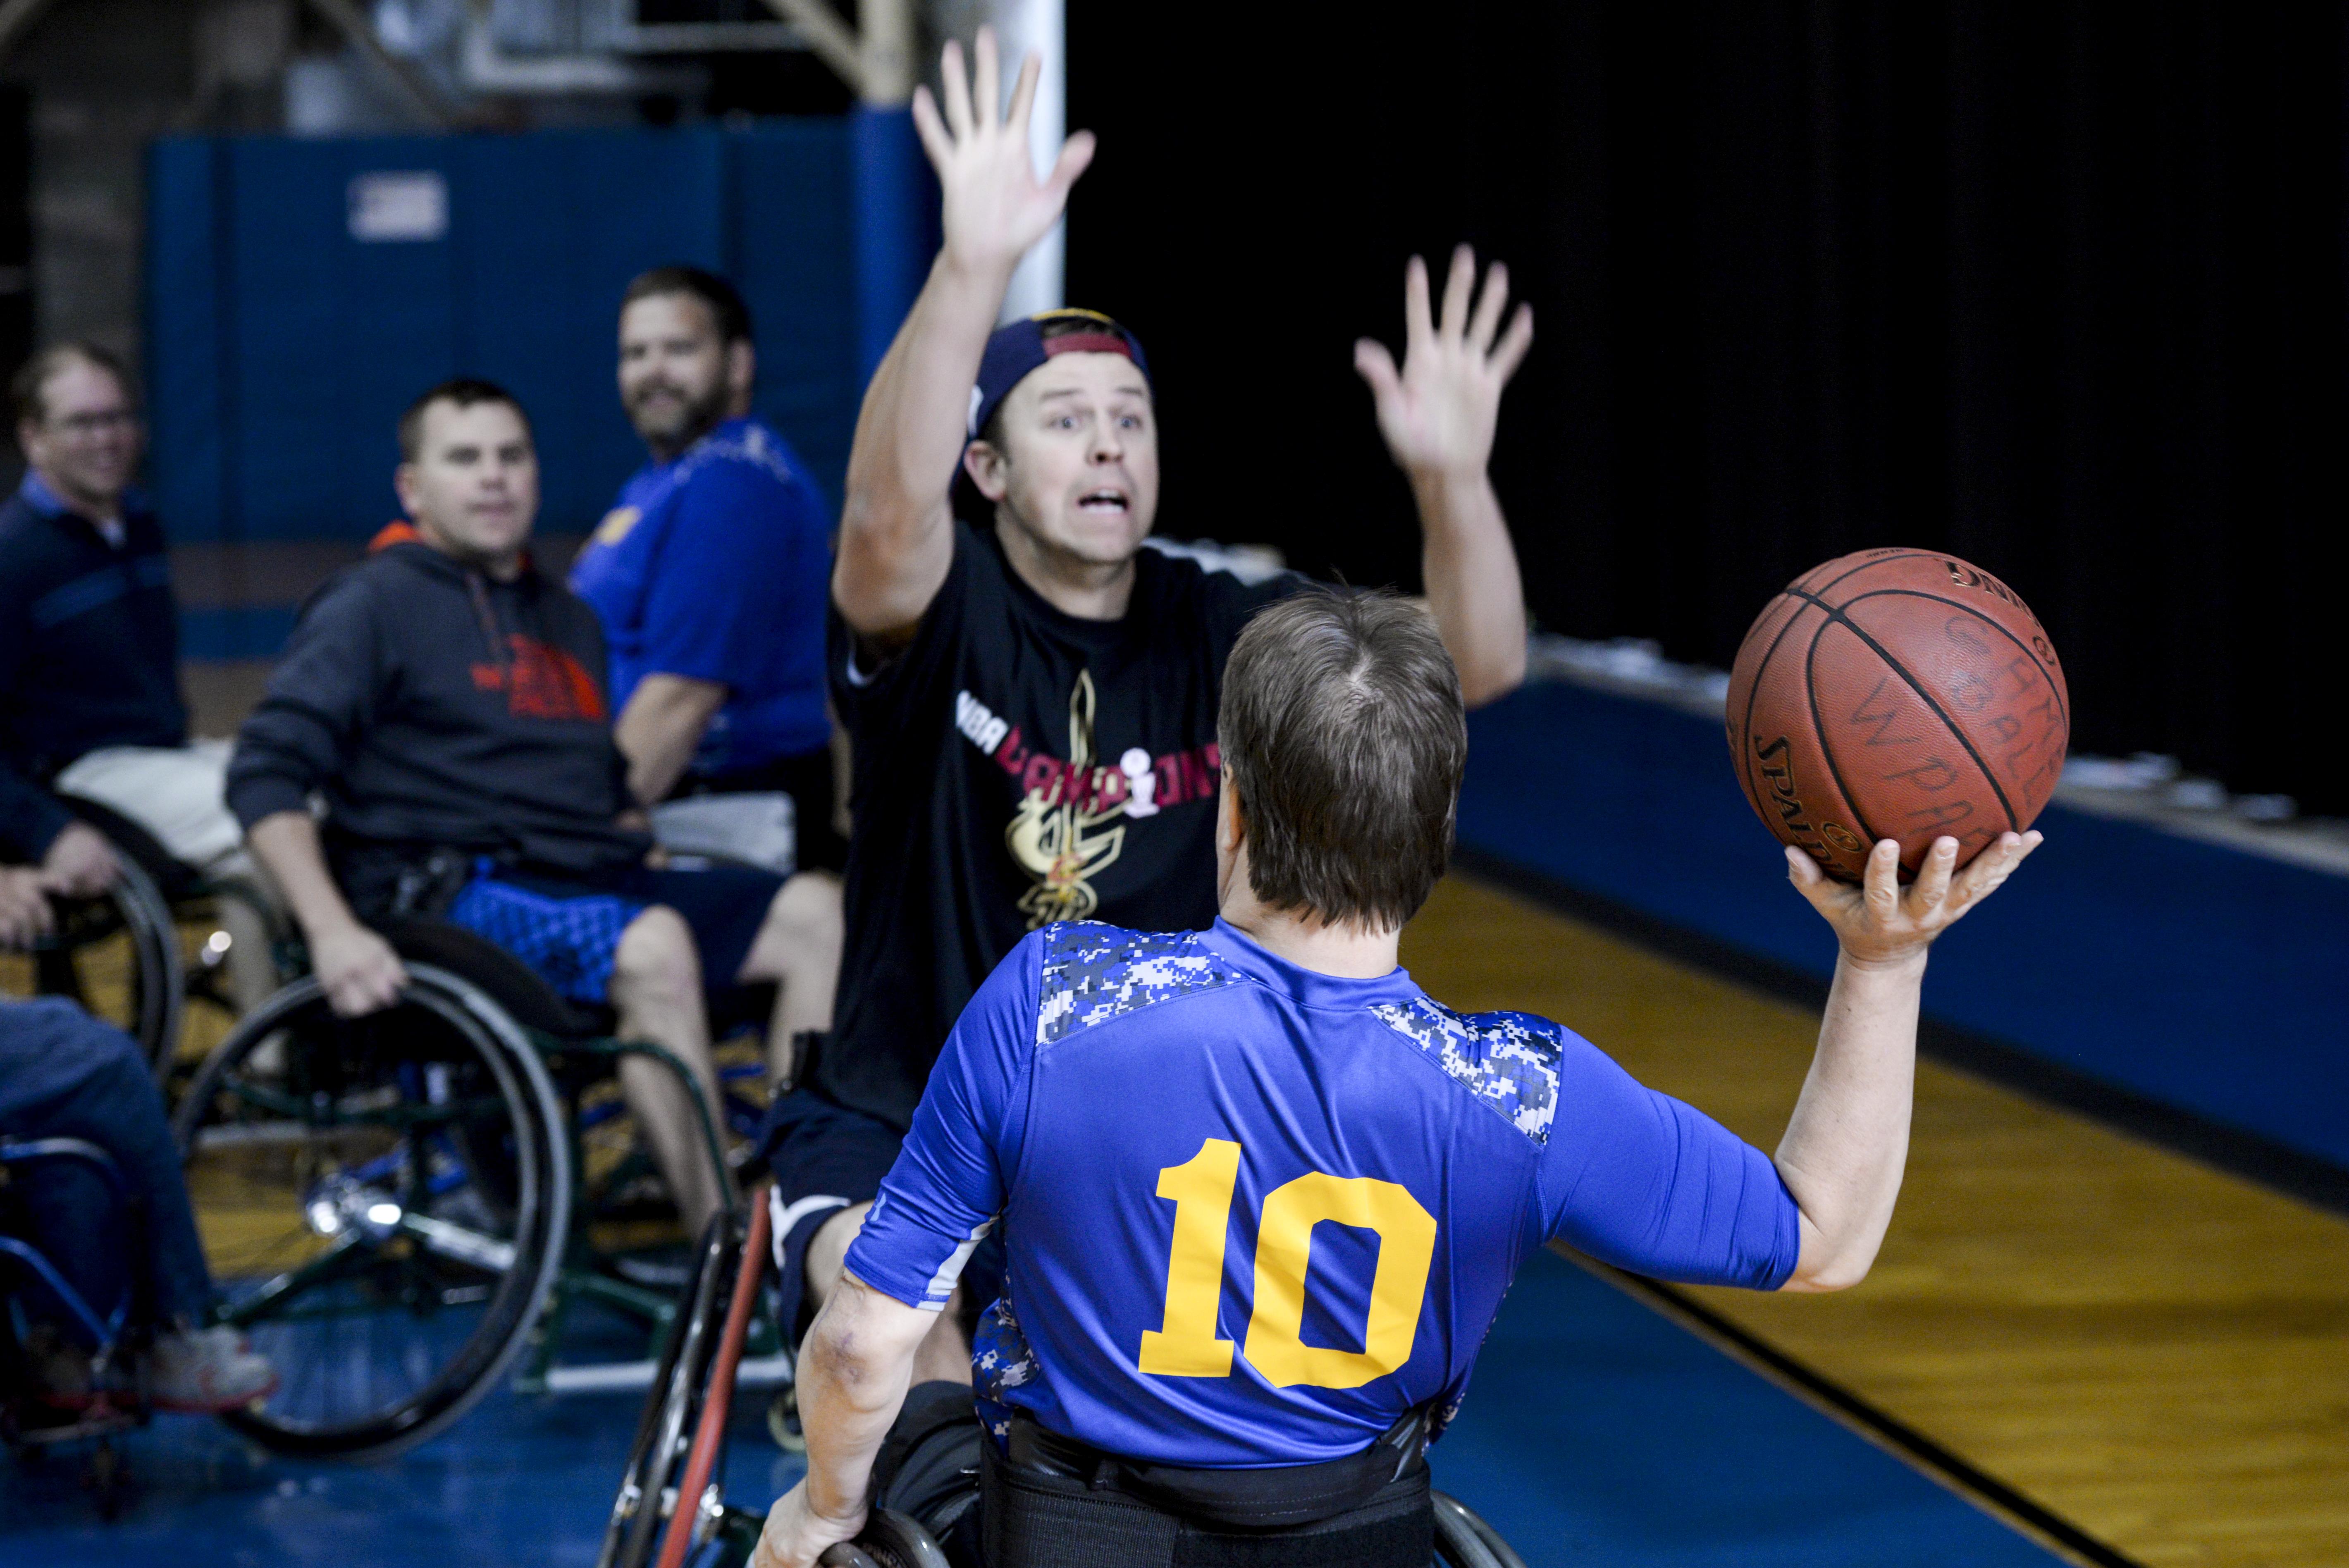 Wheel Chair Basketball Game Brings National Disability Awareness